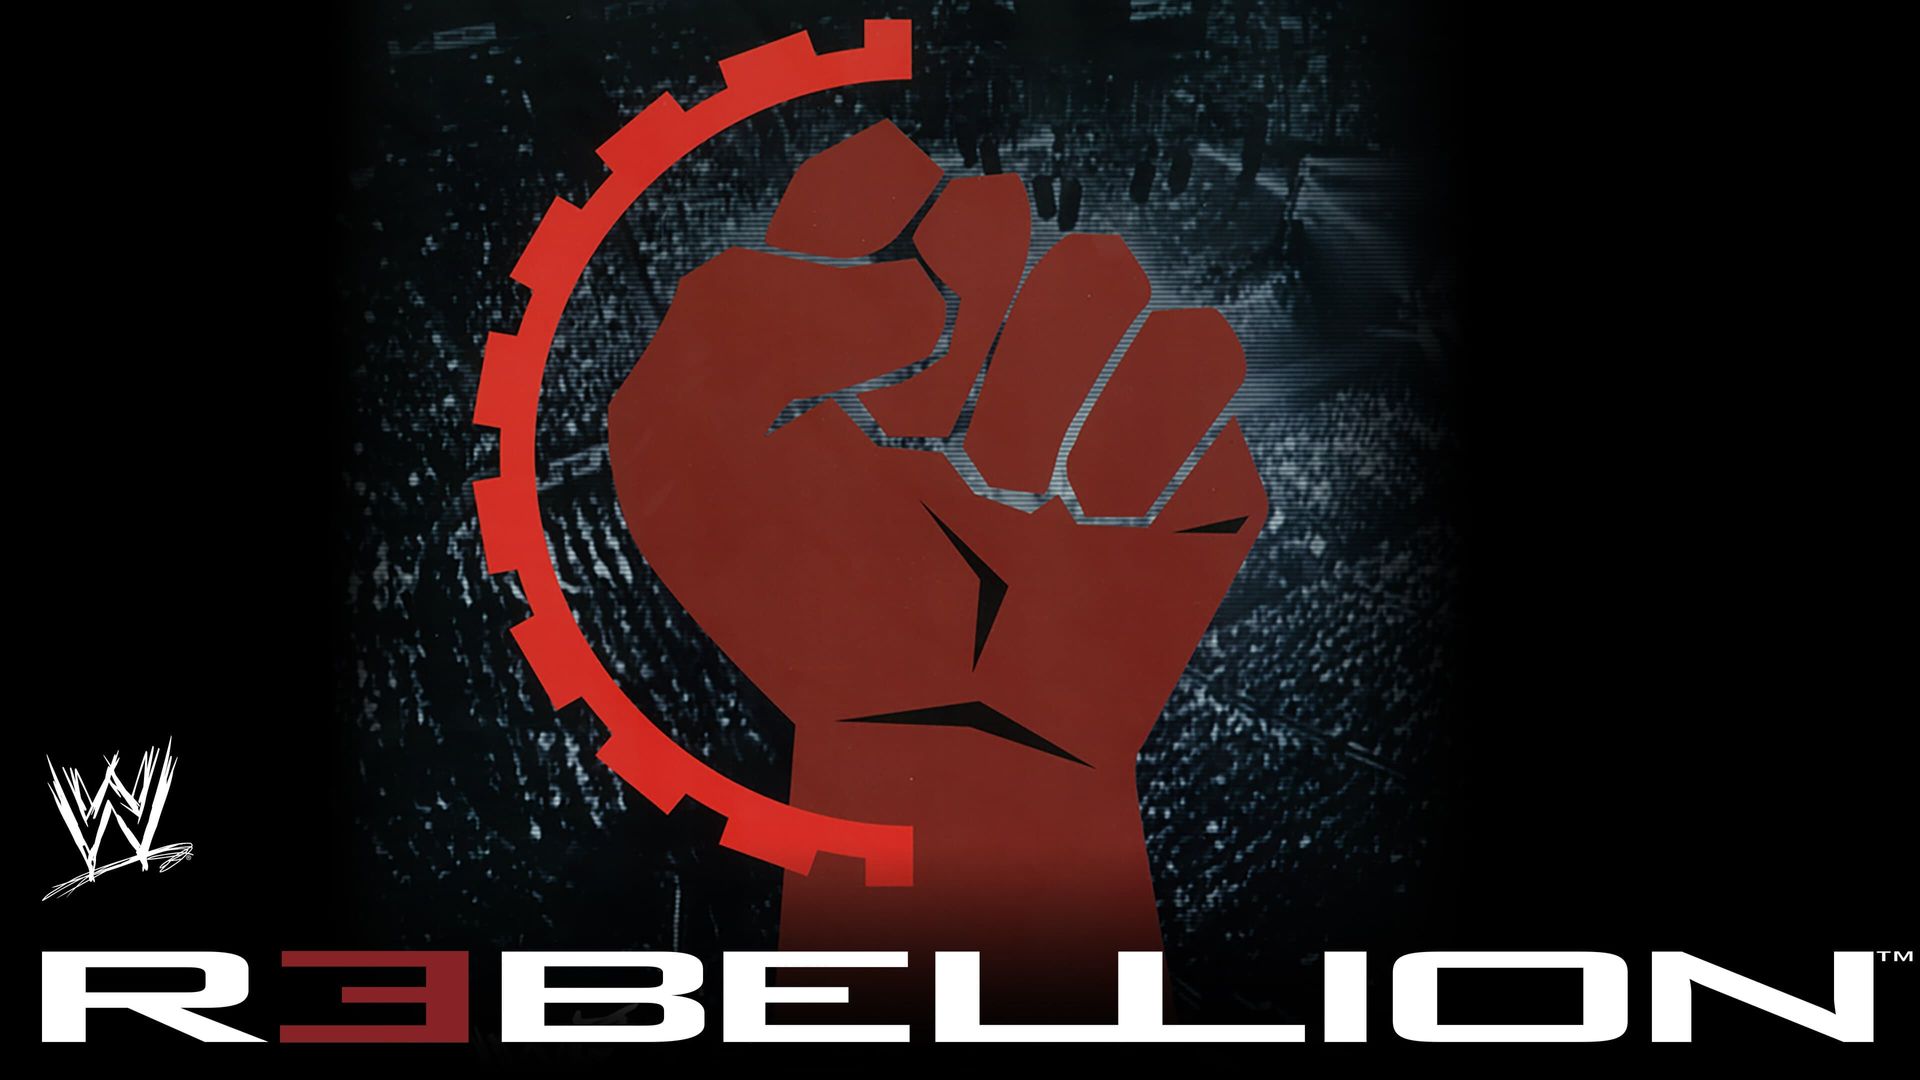 WWF Rebellion background